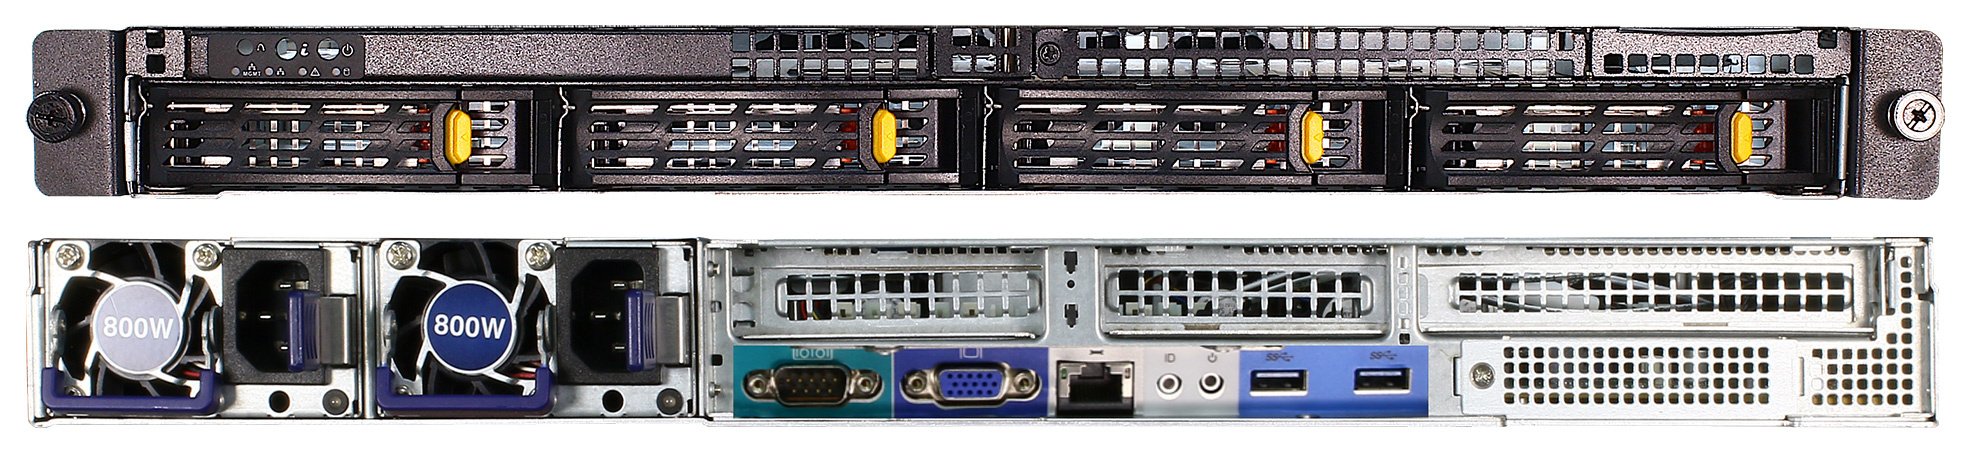 Сервер iRU C1204P, 2 x Intel Xeon Silver 4208, 2 x 16Gb, RAM